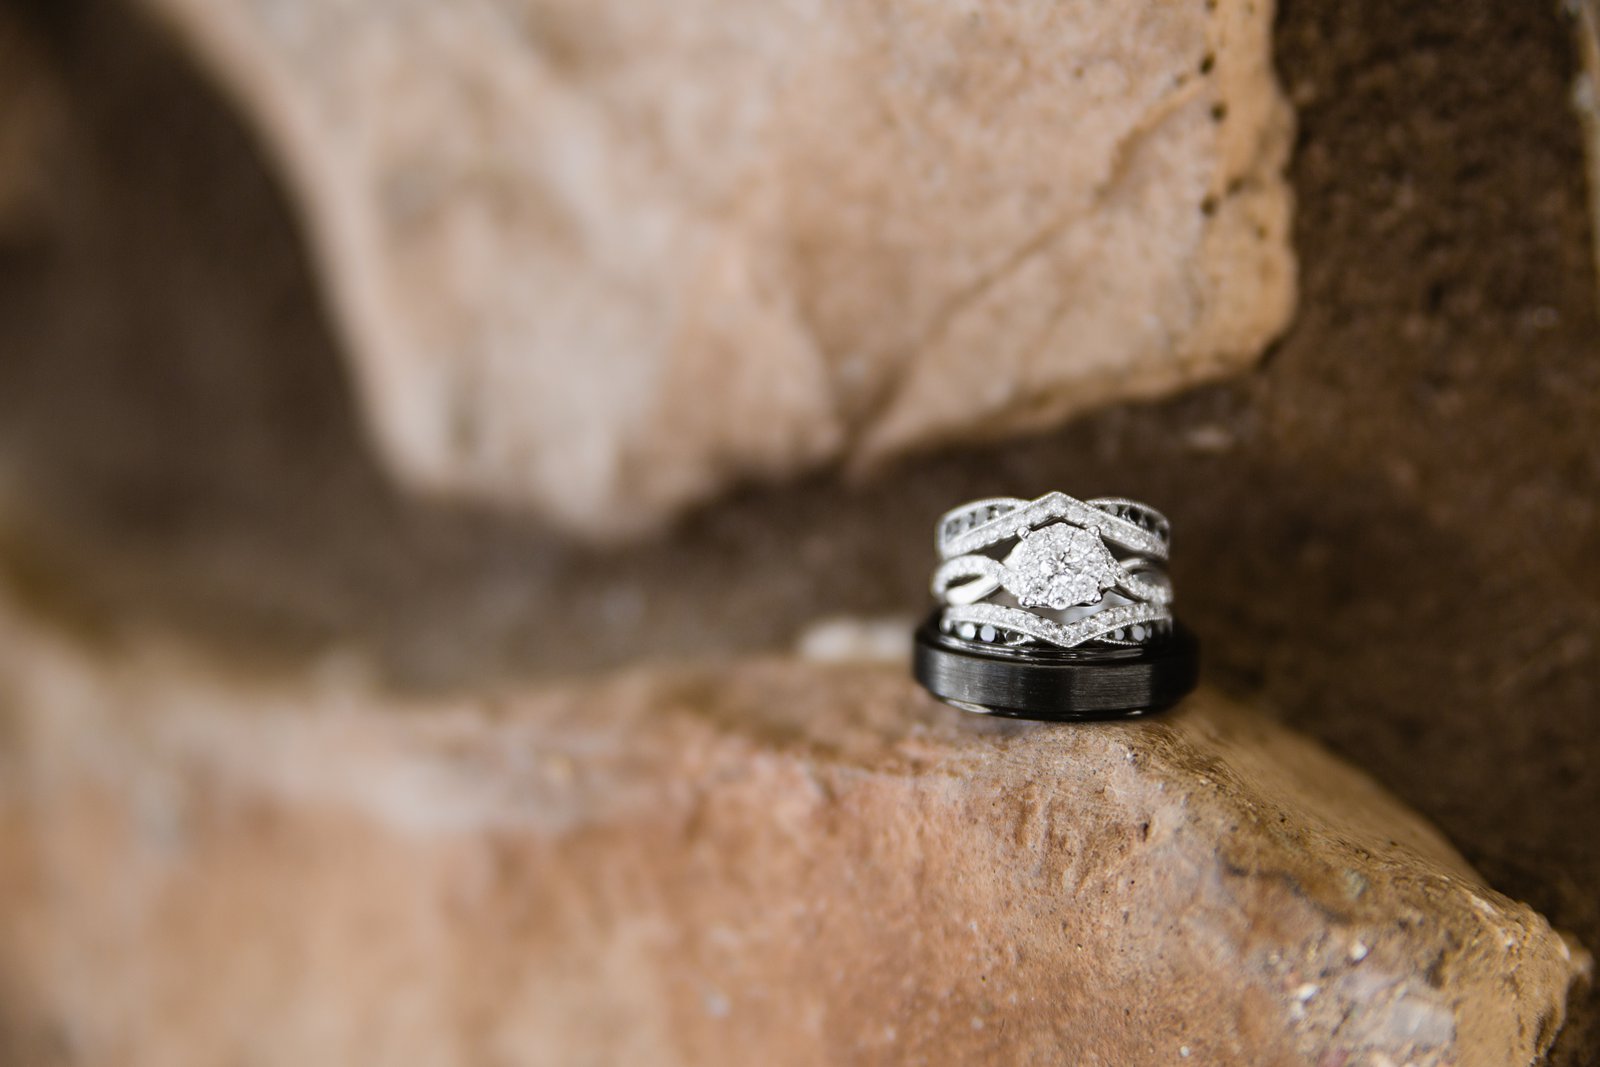 Alternative black and diamond wedding ring detail image by PMA Photography.